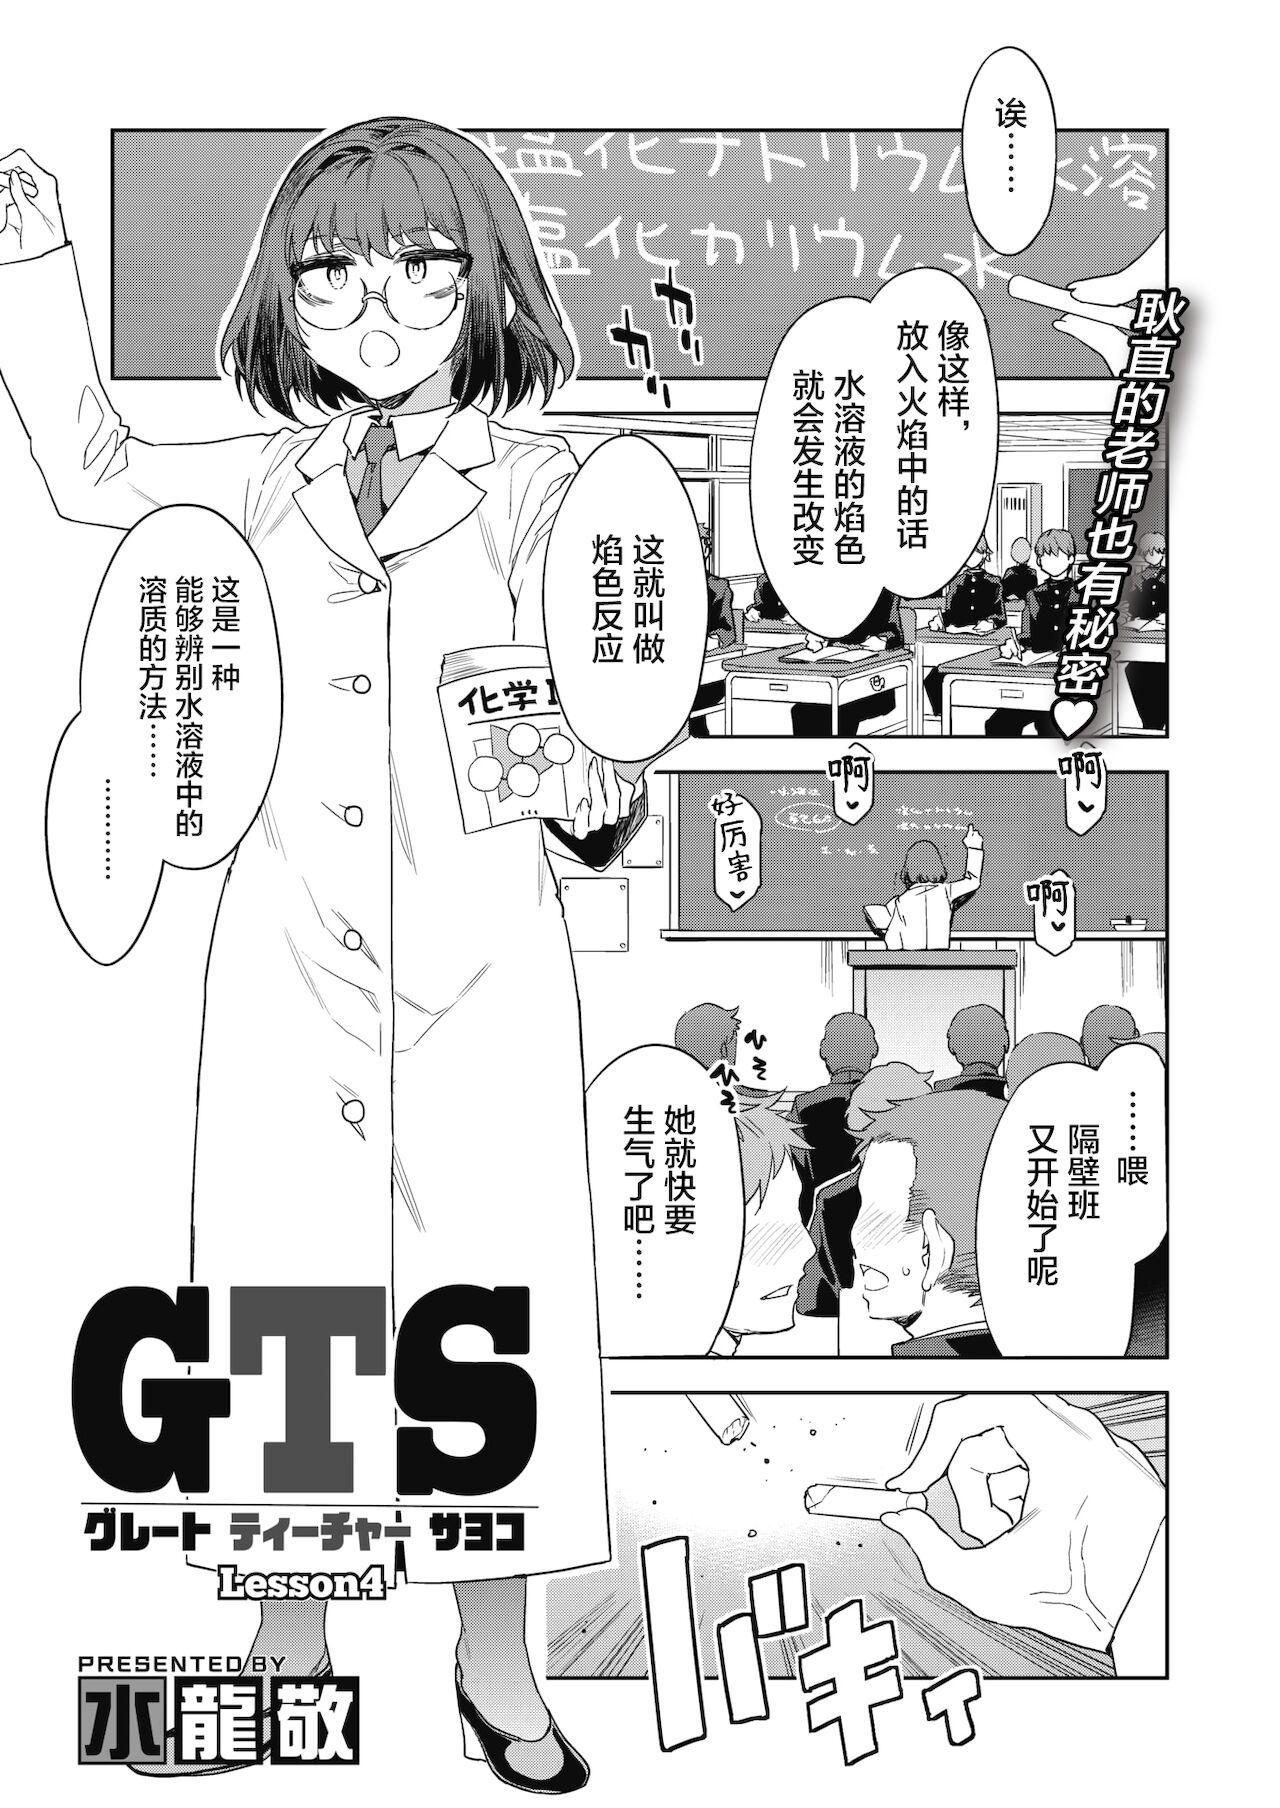 GTS Great Teacher Sayoko Lesson 4 0